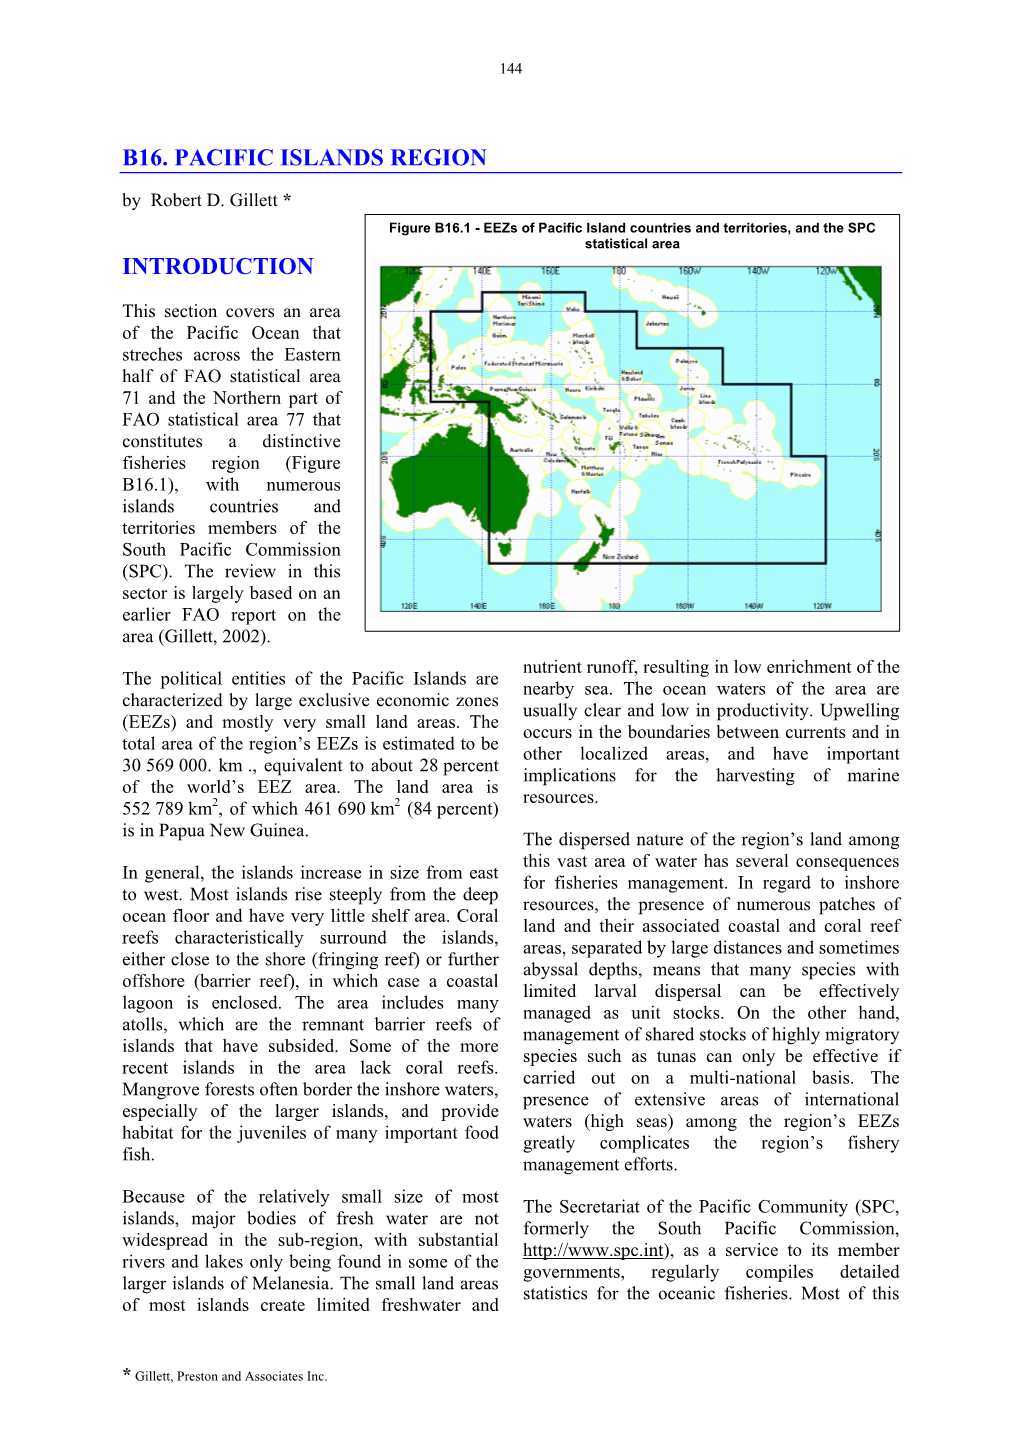 B16. Pacific Islands Region Introduction